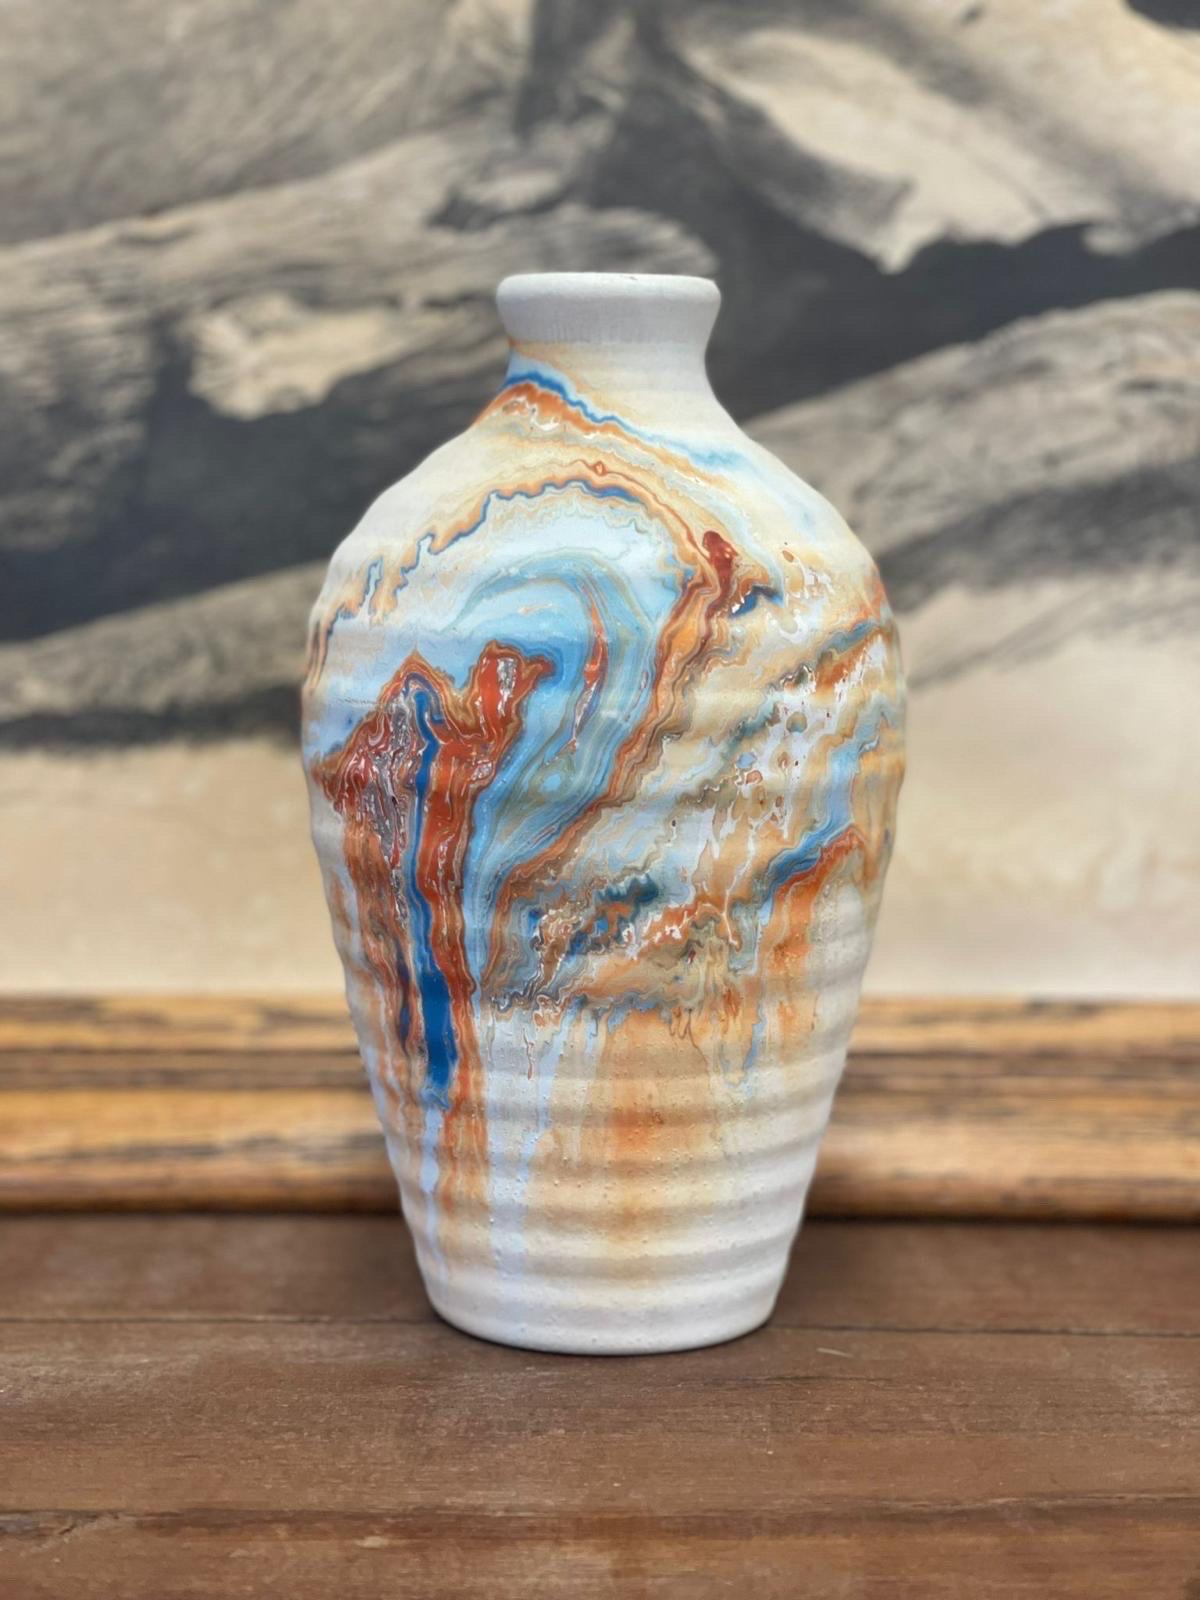 Vintage Handmade Nemadji Vase Minnesota Multicolored Stamped ceramic vase antique pottery orange and blue designed decor

Dimensions. 5 W ; 5 D ; 8 1/2 H